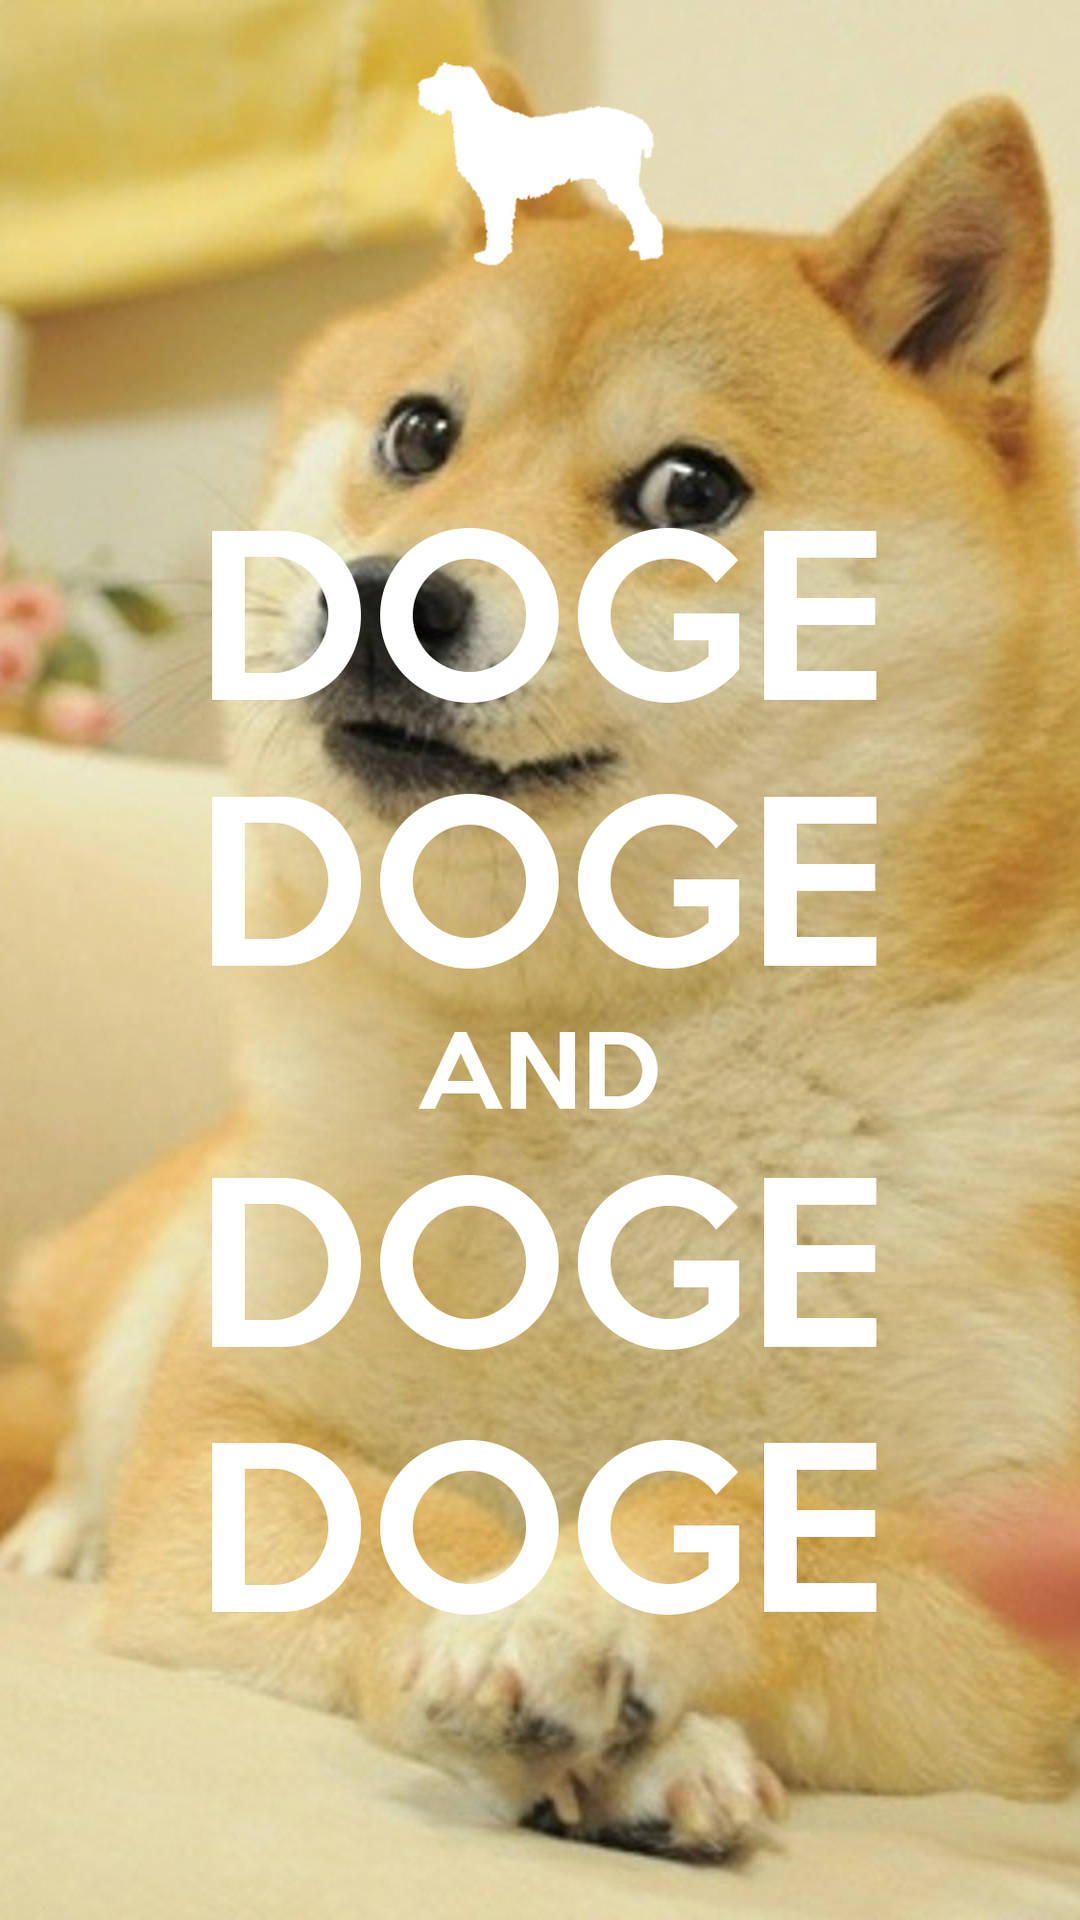 Doge Meme inspirational quote version wallpaper